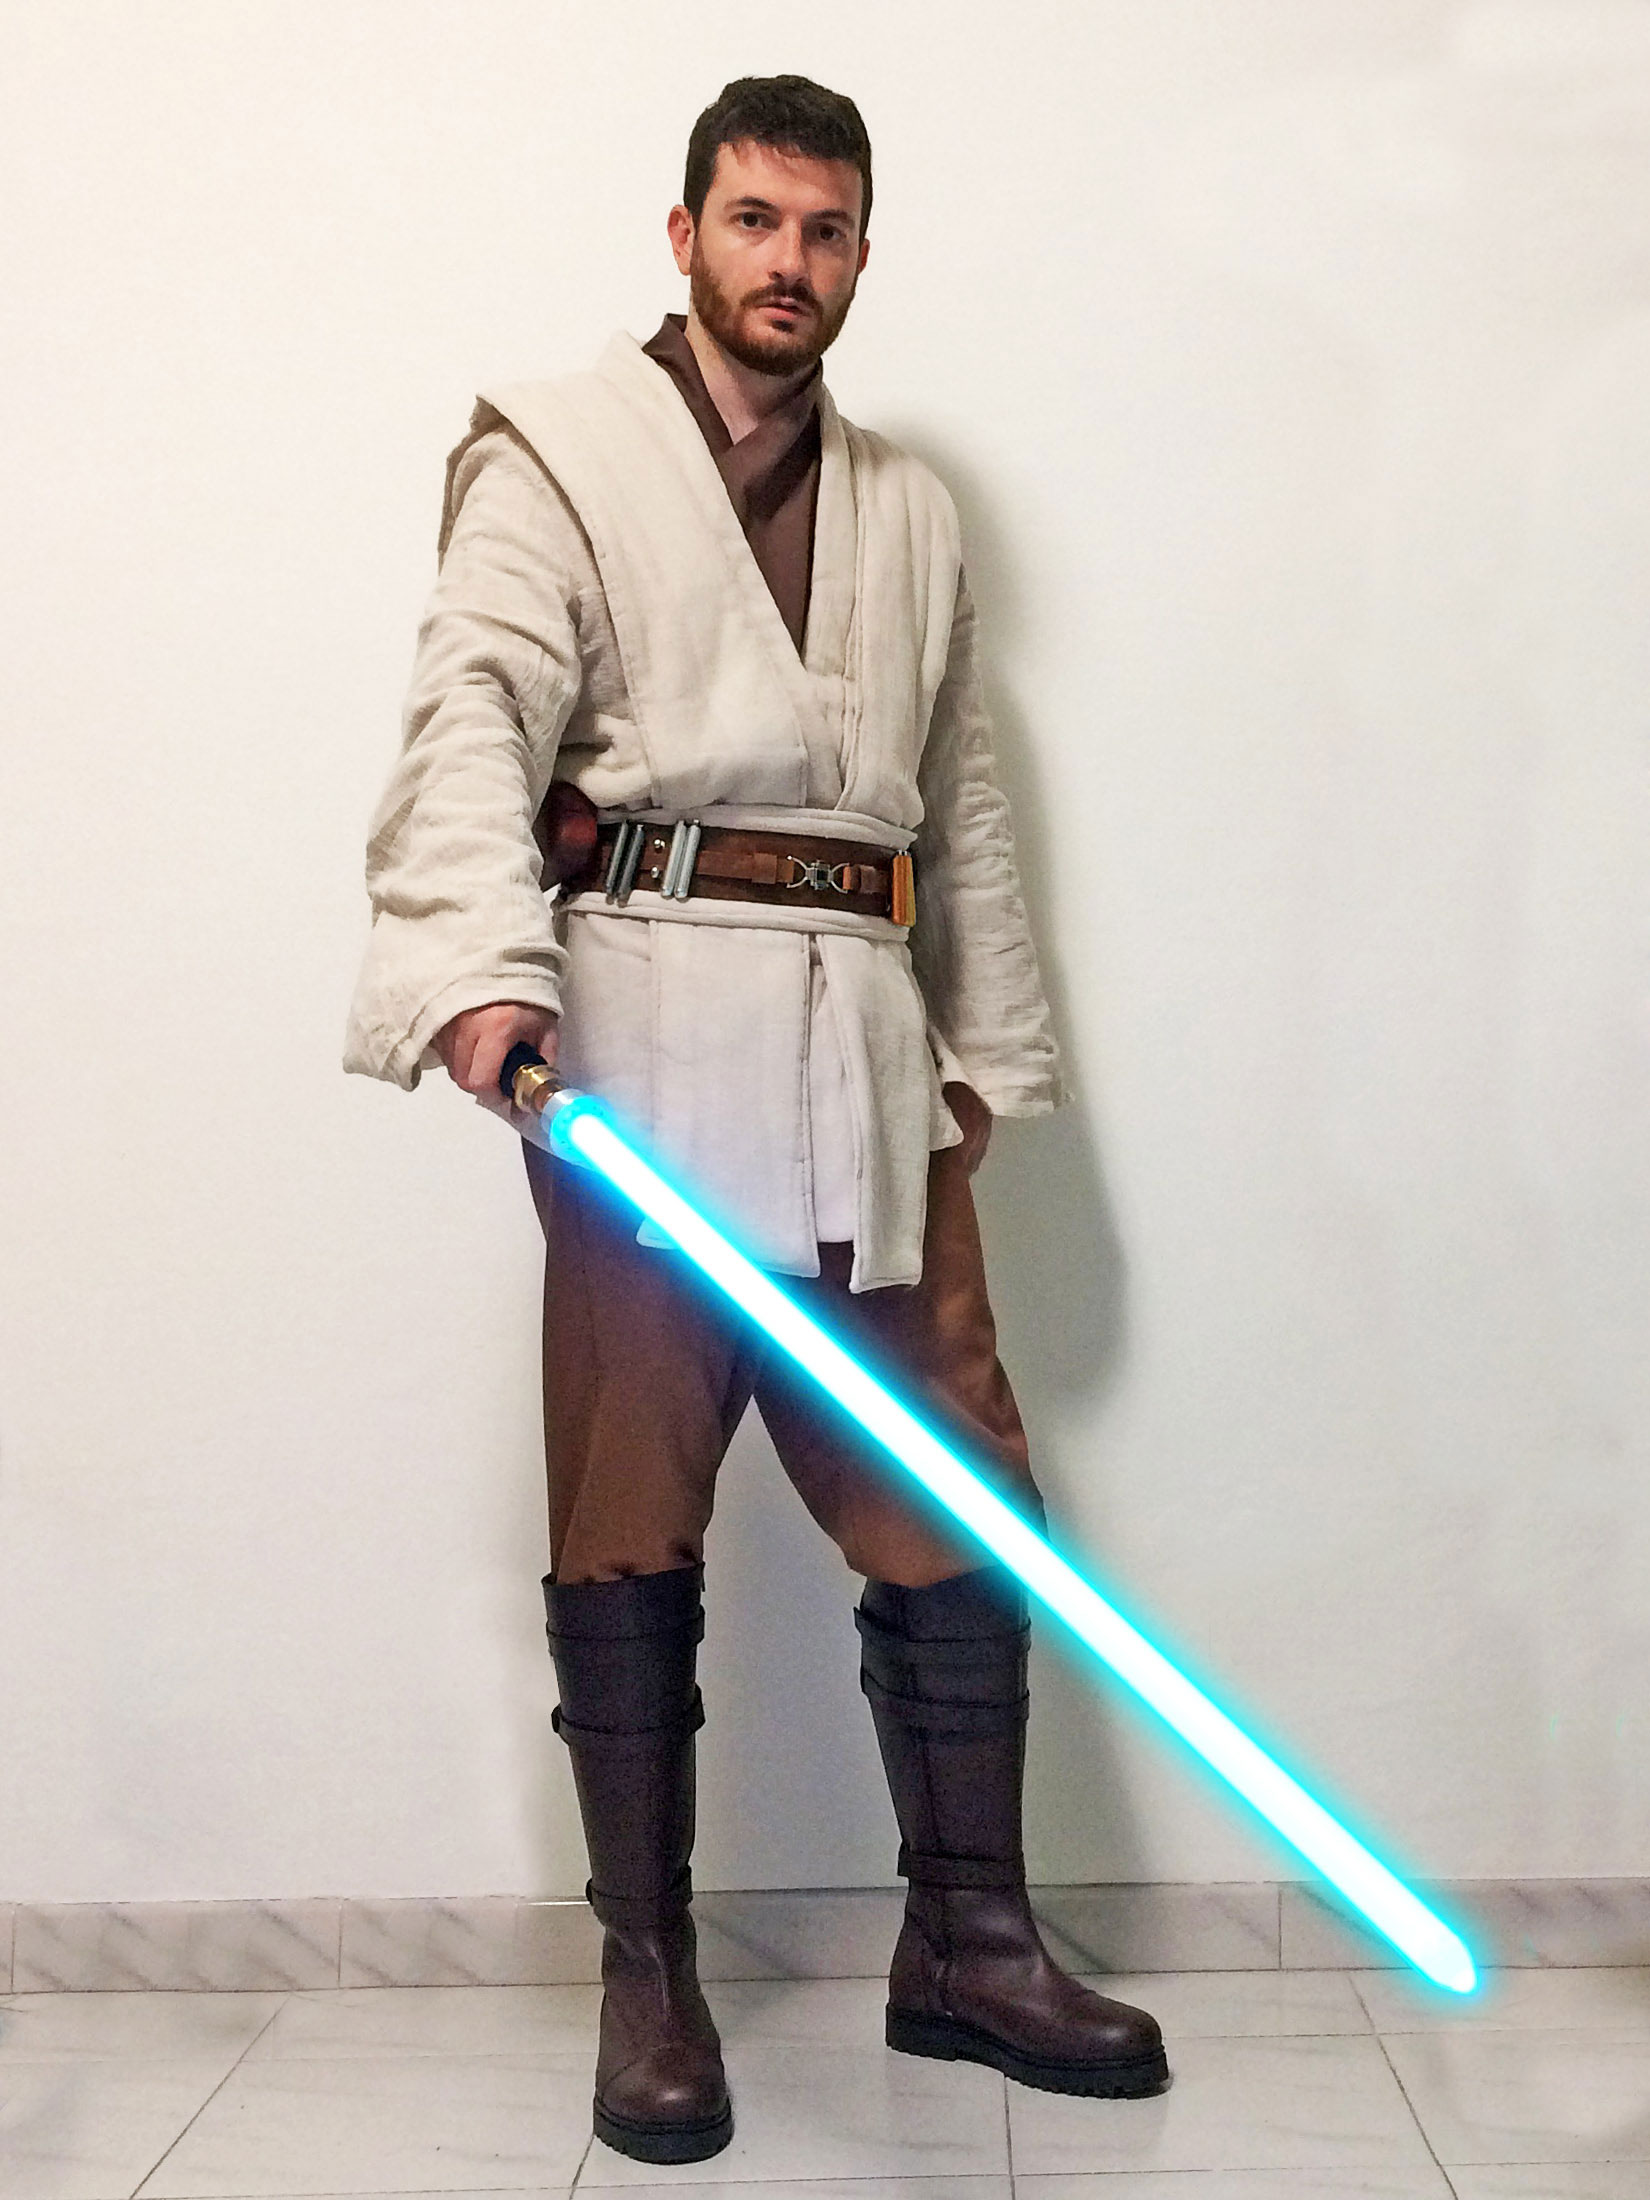 STAR WARS COSTUMES: - Obi-Wan Kenobi Tunic Review from Roberto